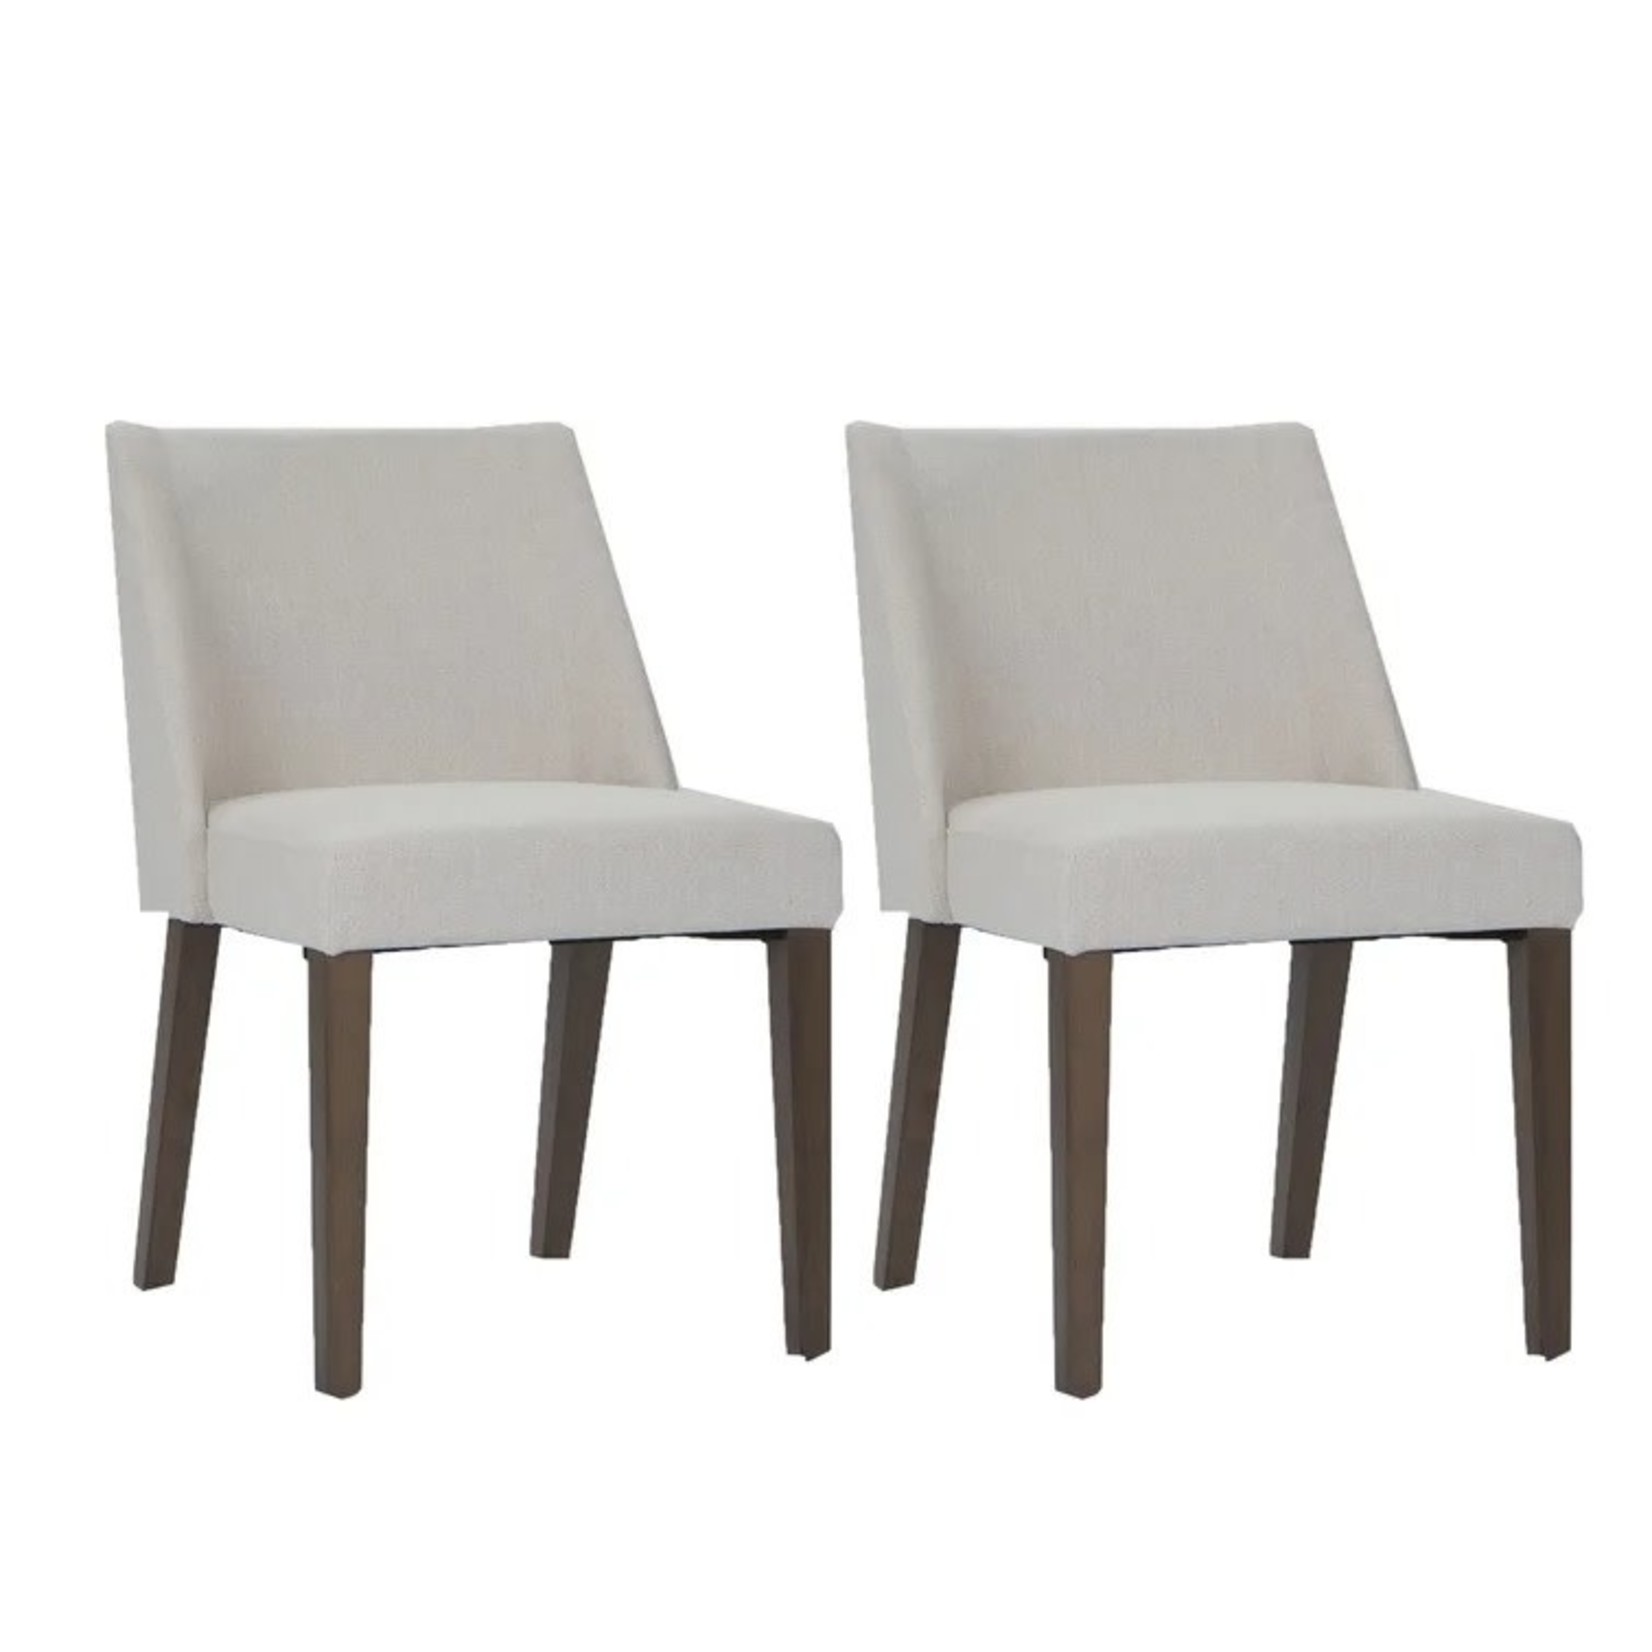 *Mcdevitt Linen Side Chairs - Set of 2 - Light Tan